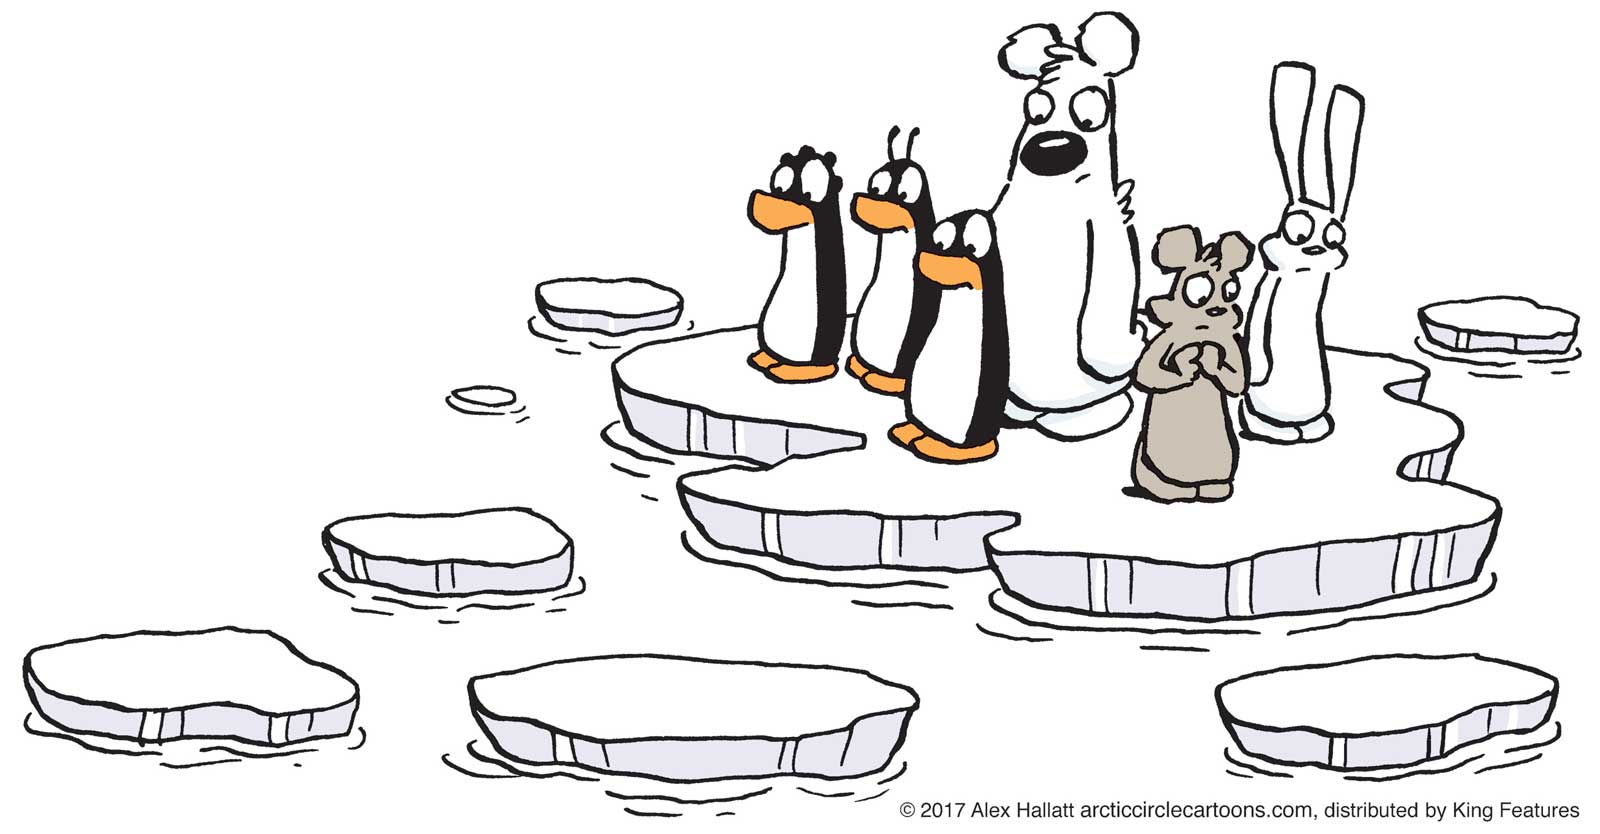 The cast of Arctic Circle, a strip created by British cartoonist Alex Hallatt